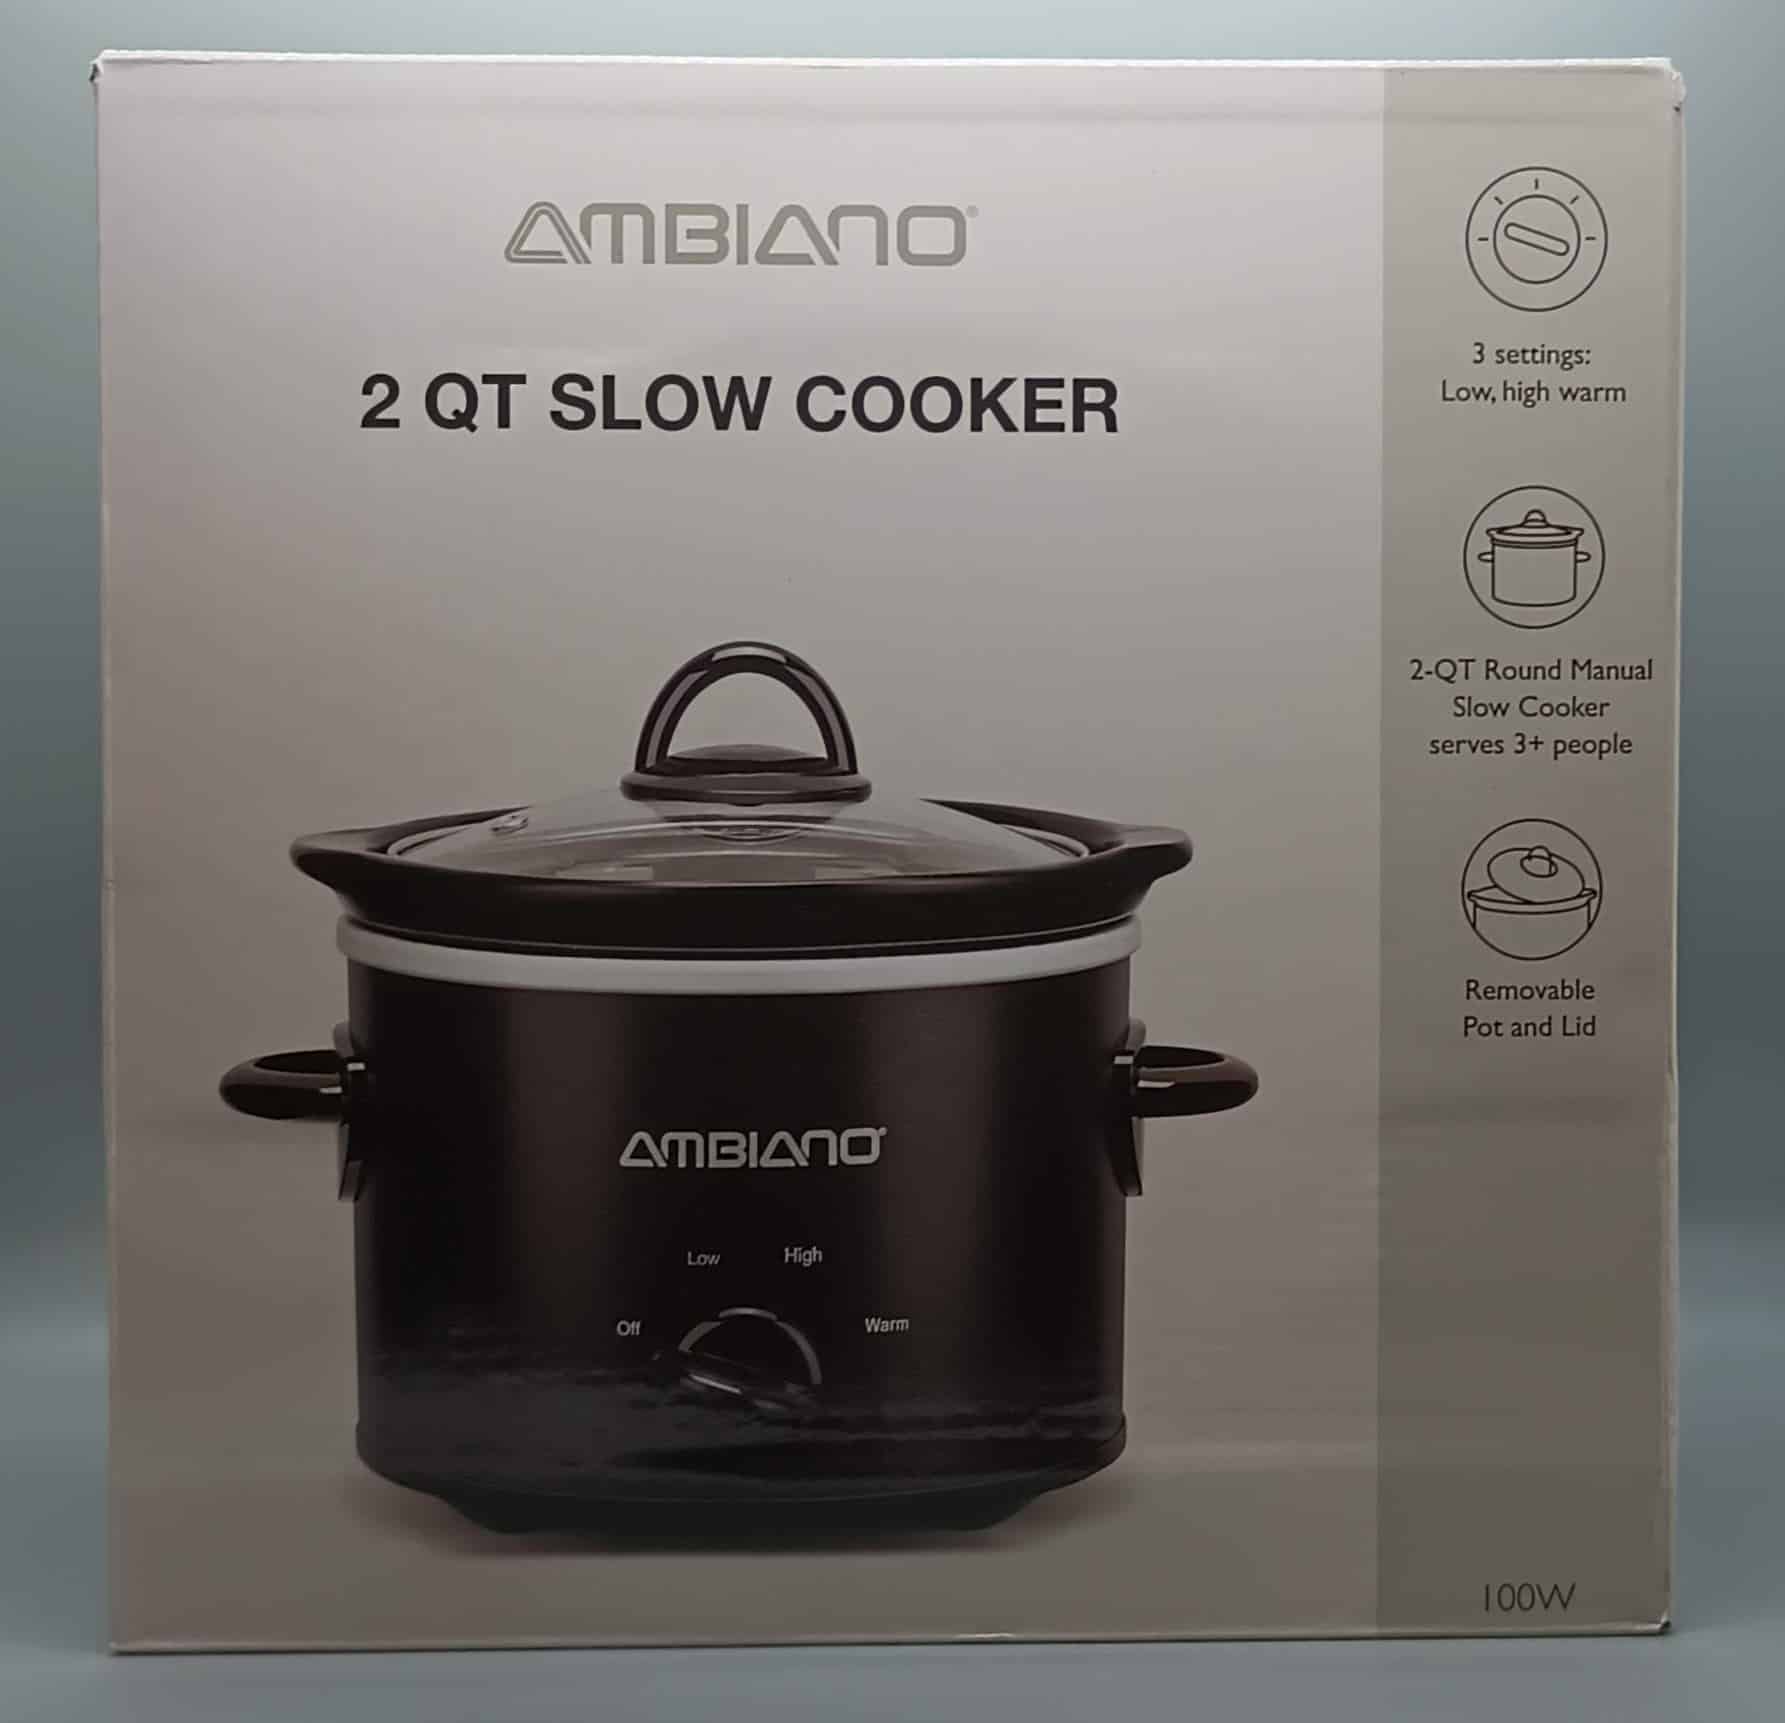 Crockpot 2 Qt Black Manual Slow Cooker